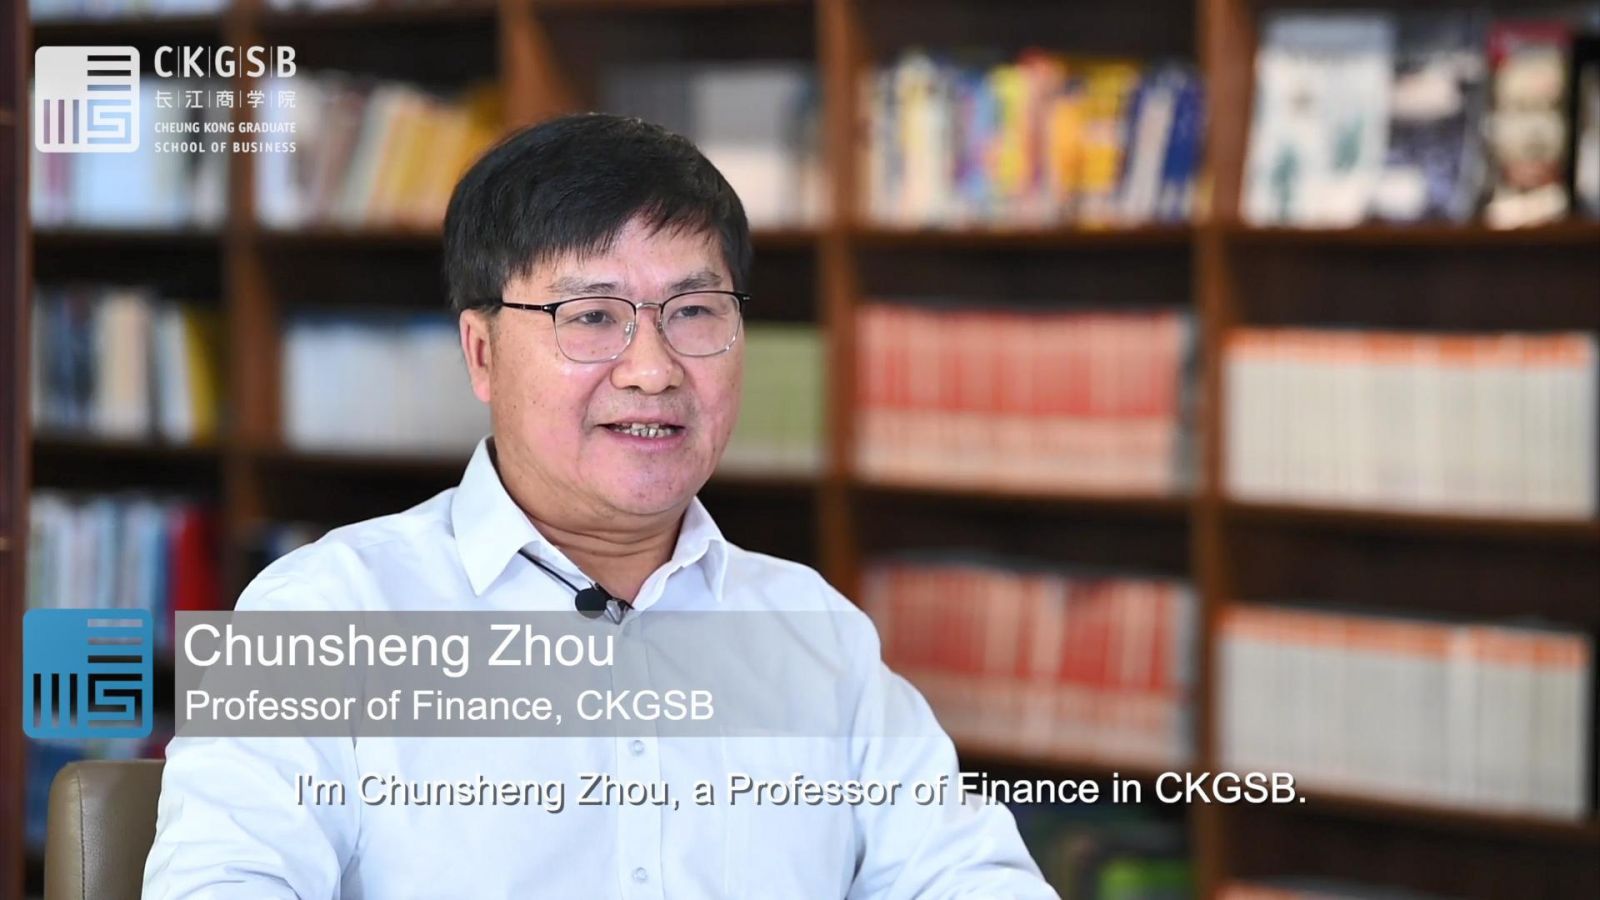 Professor-Chunsheng-Zhou-CKGSB-3gqvhplfs7s9d896ydon40.jpg